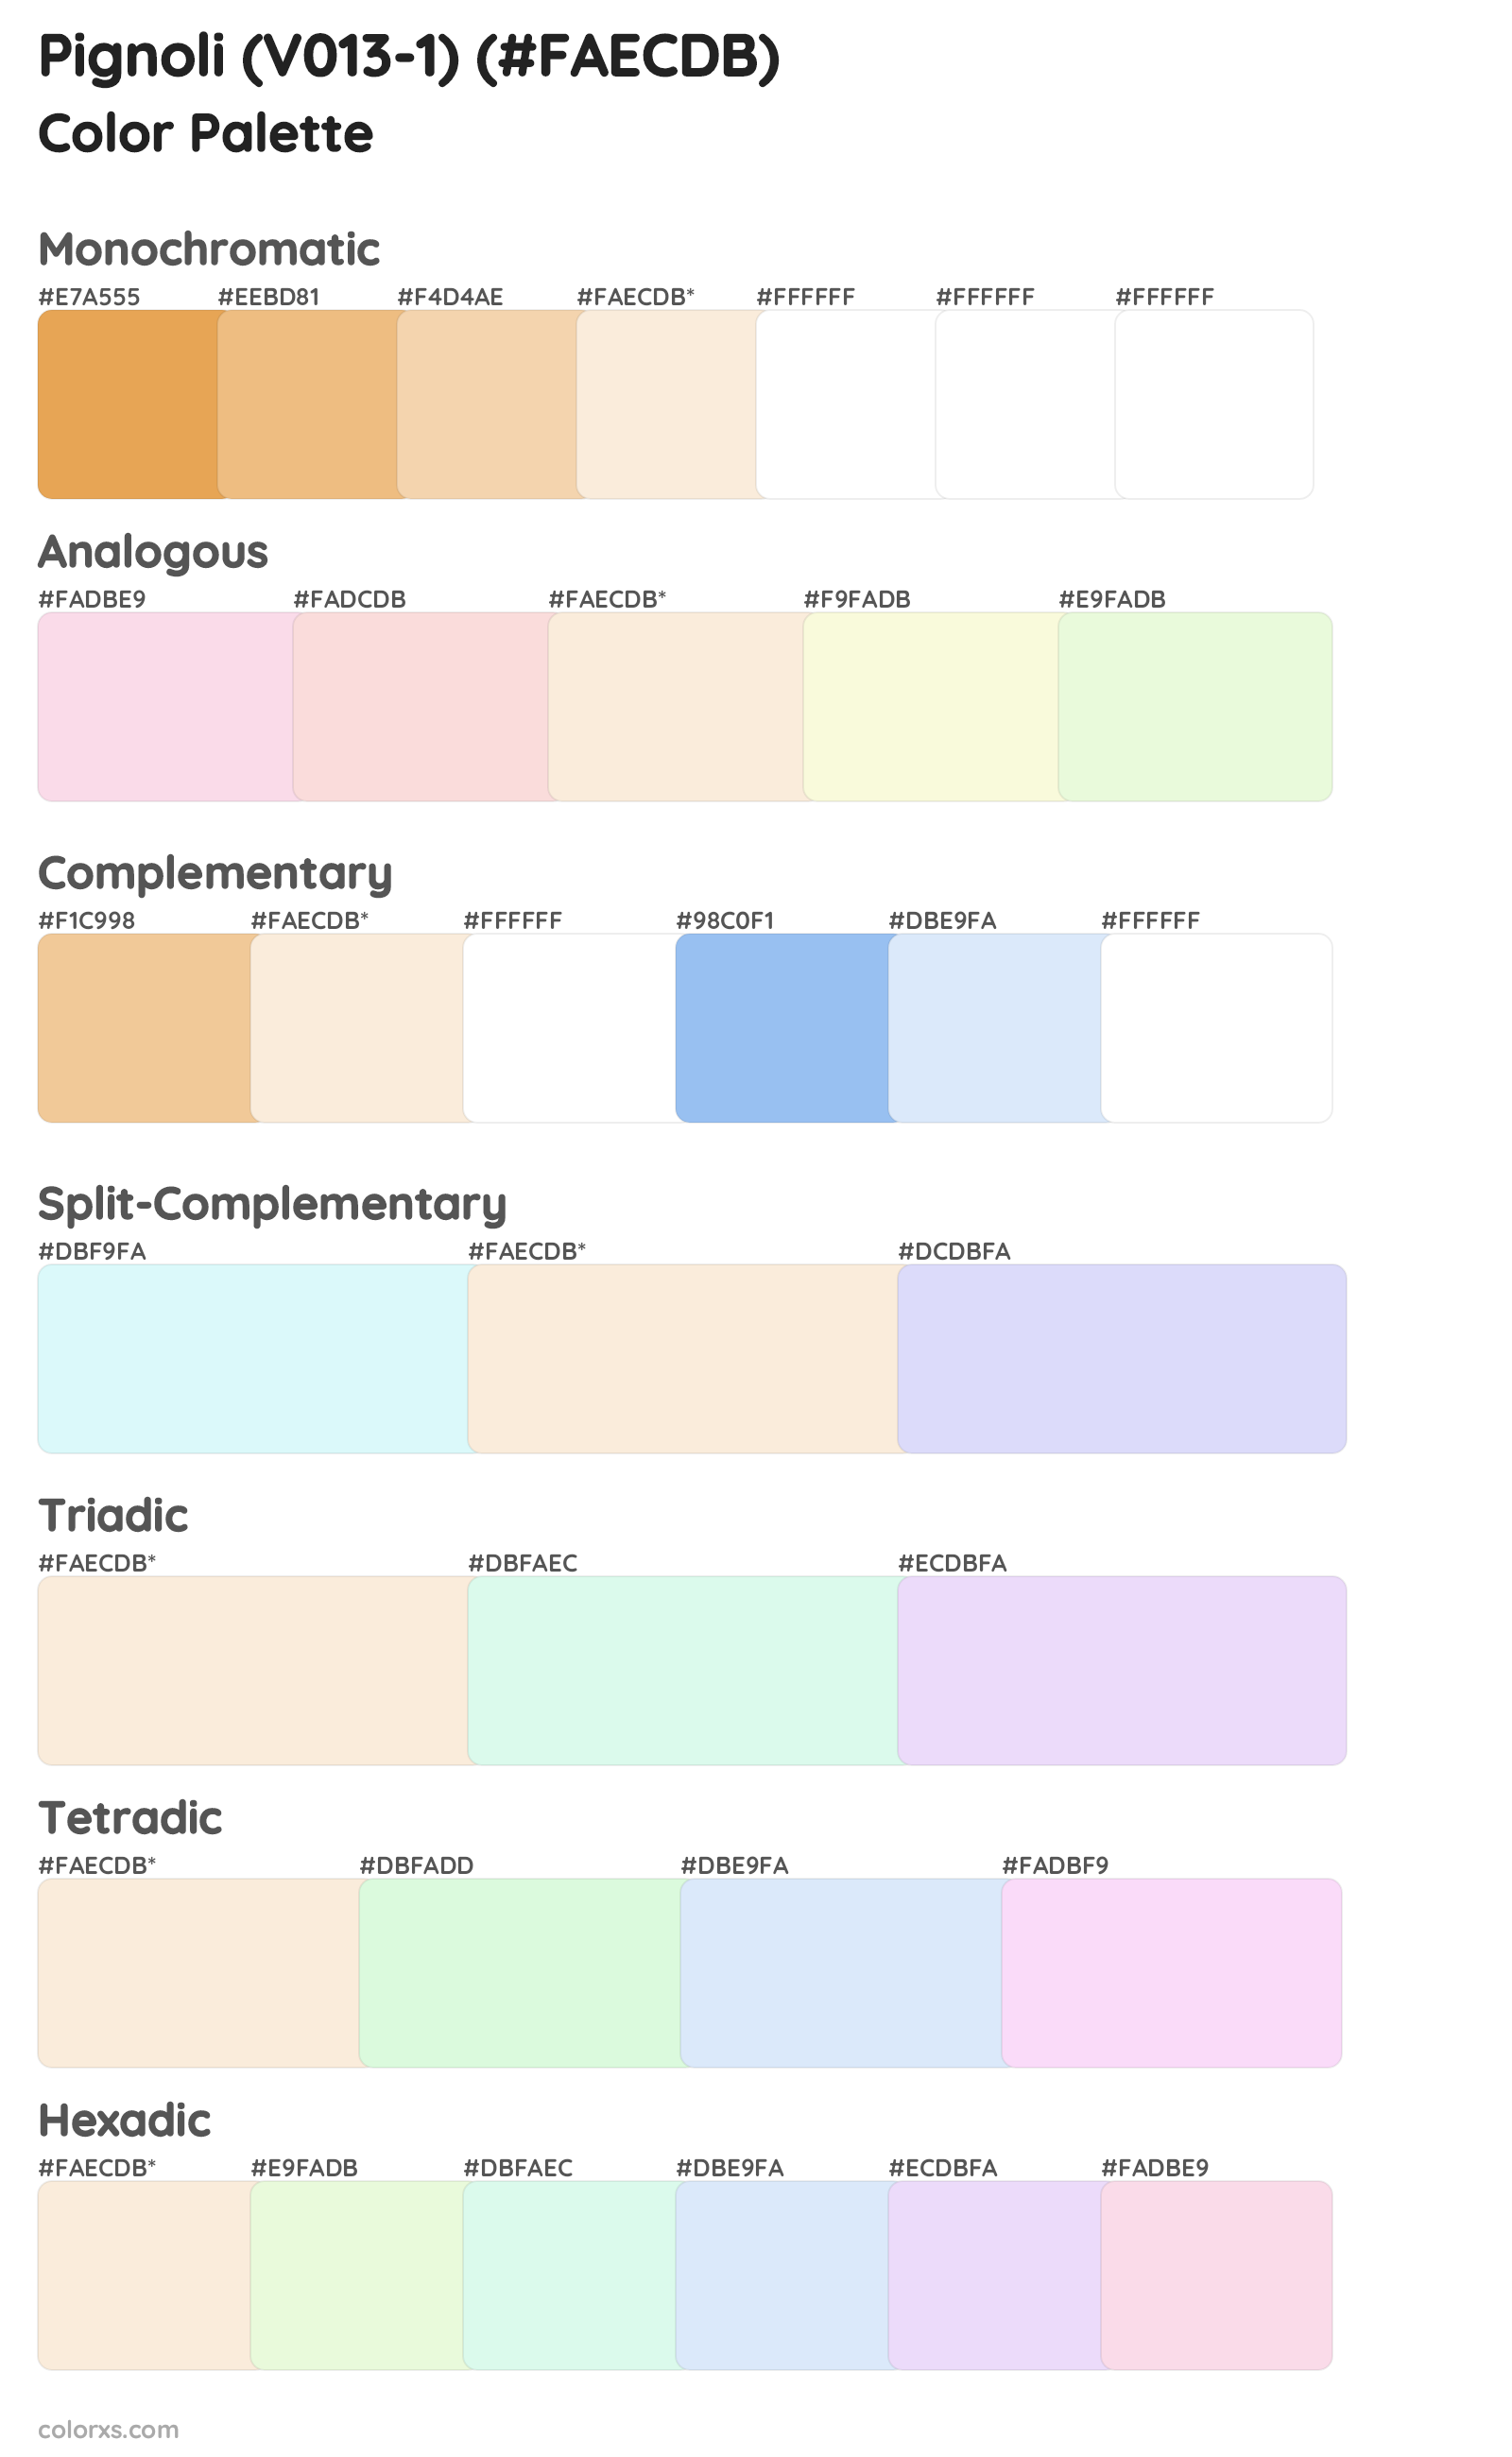 Pignoli (V013-1) Color Scheme Palettes